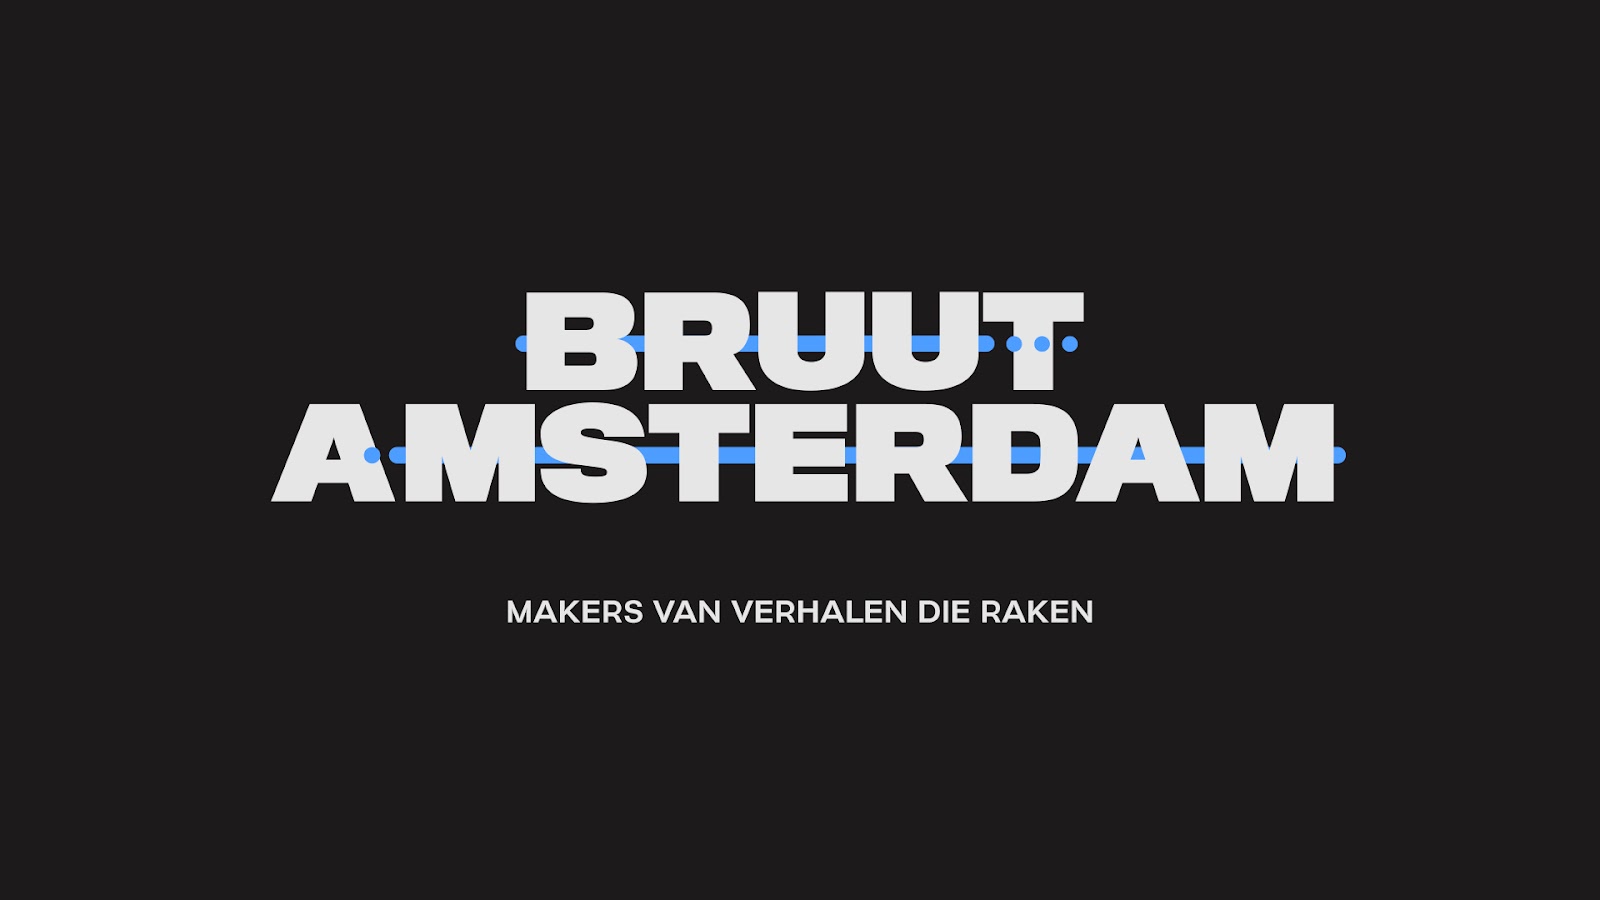 Bruut Amsterdam lanceert nieuwe merkidentiteit